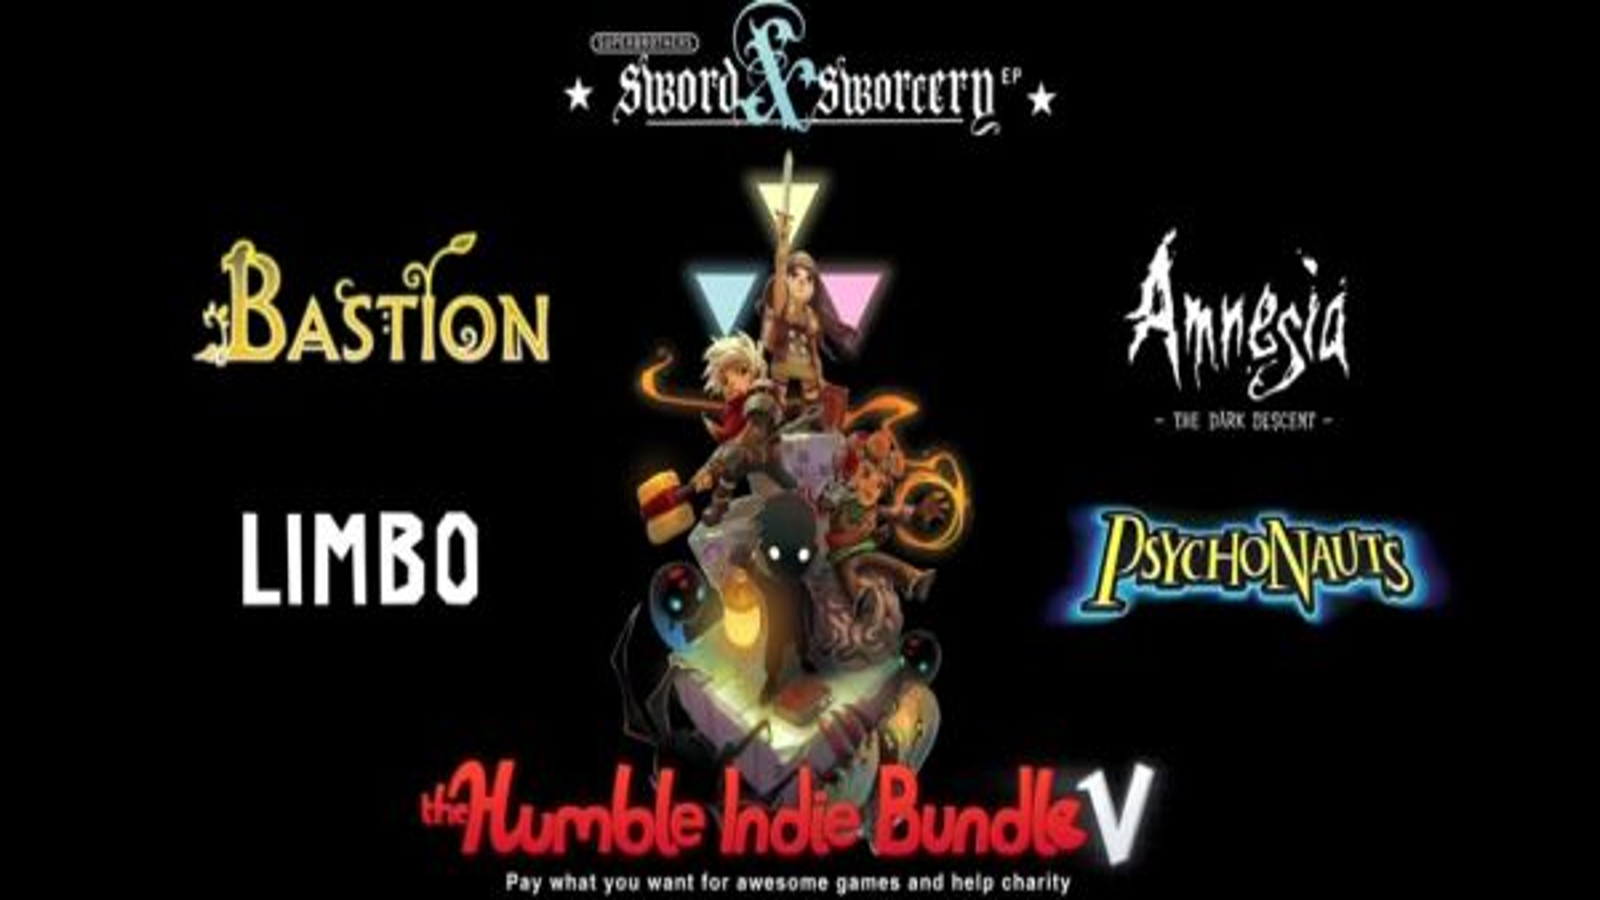 Humble Software Bundle: Level Up Remix - Indie Game Bundles